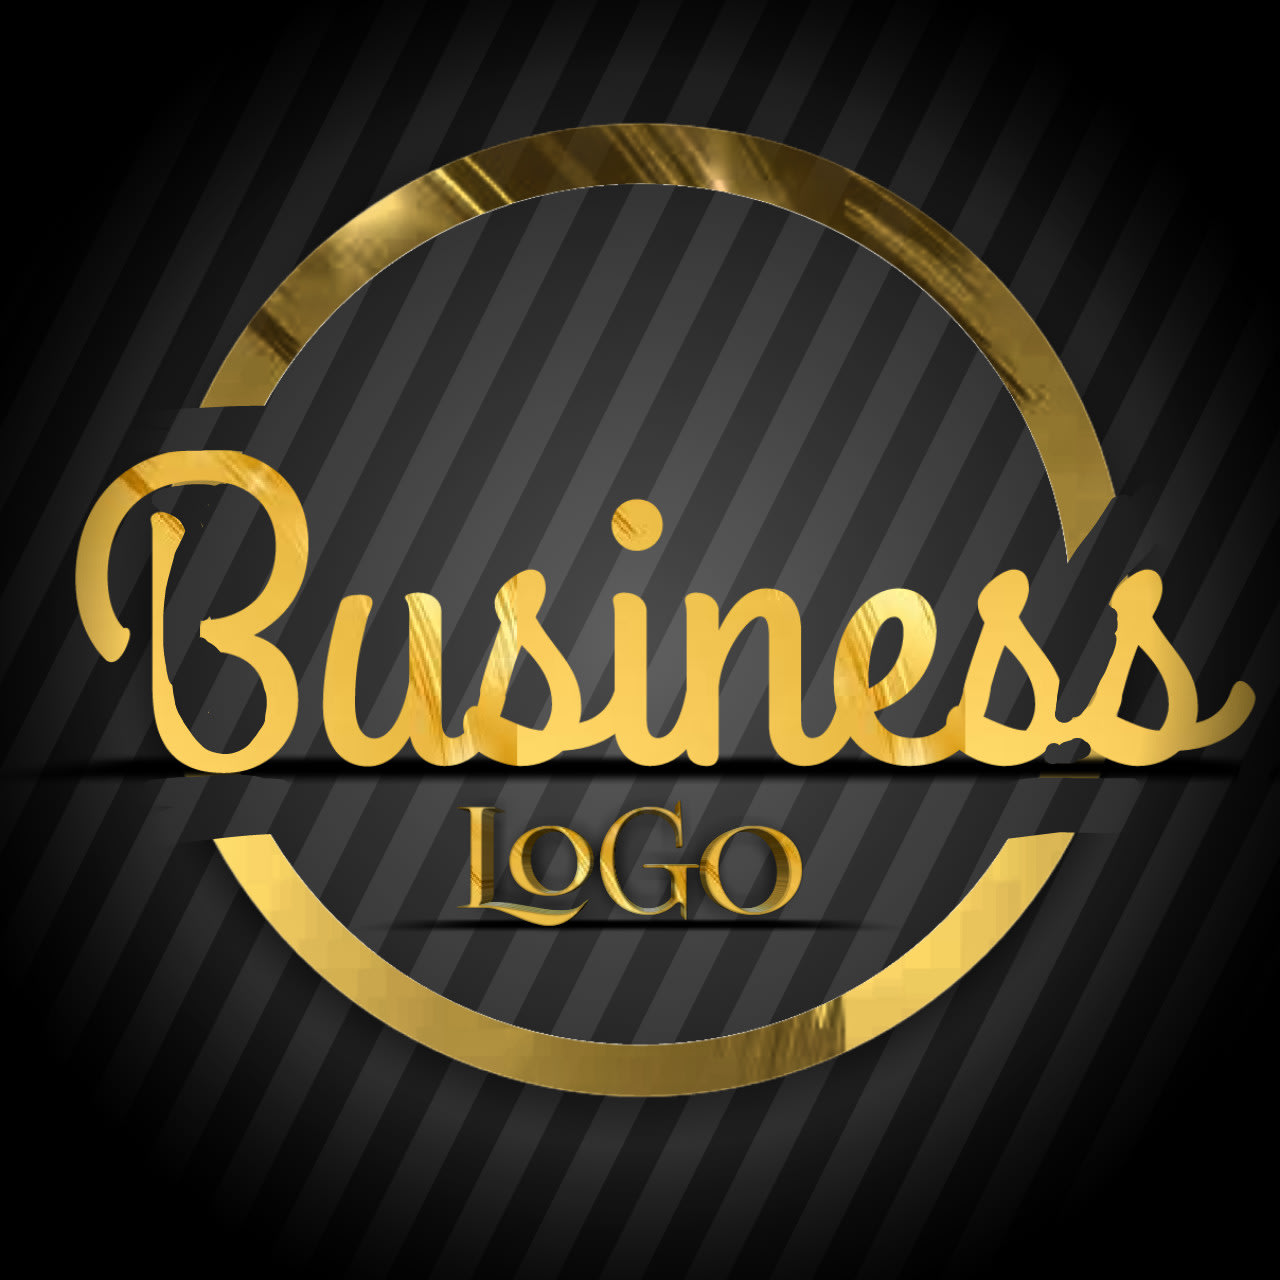 LV Company Name Logo Design, How To Make Professional Logo Design  Pixellab